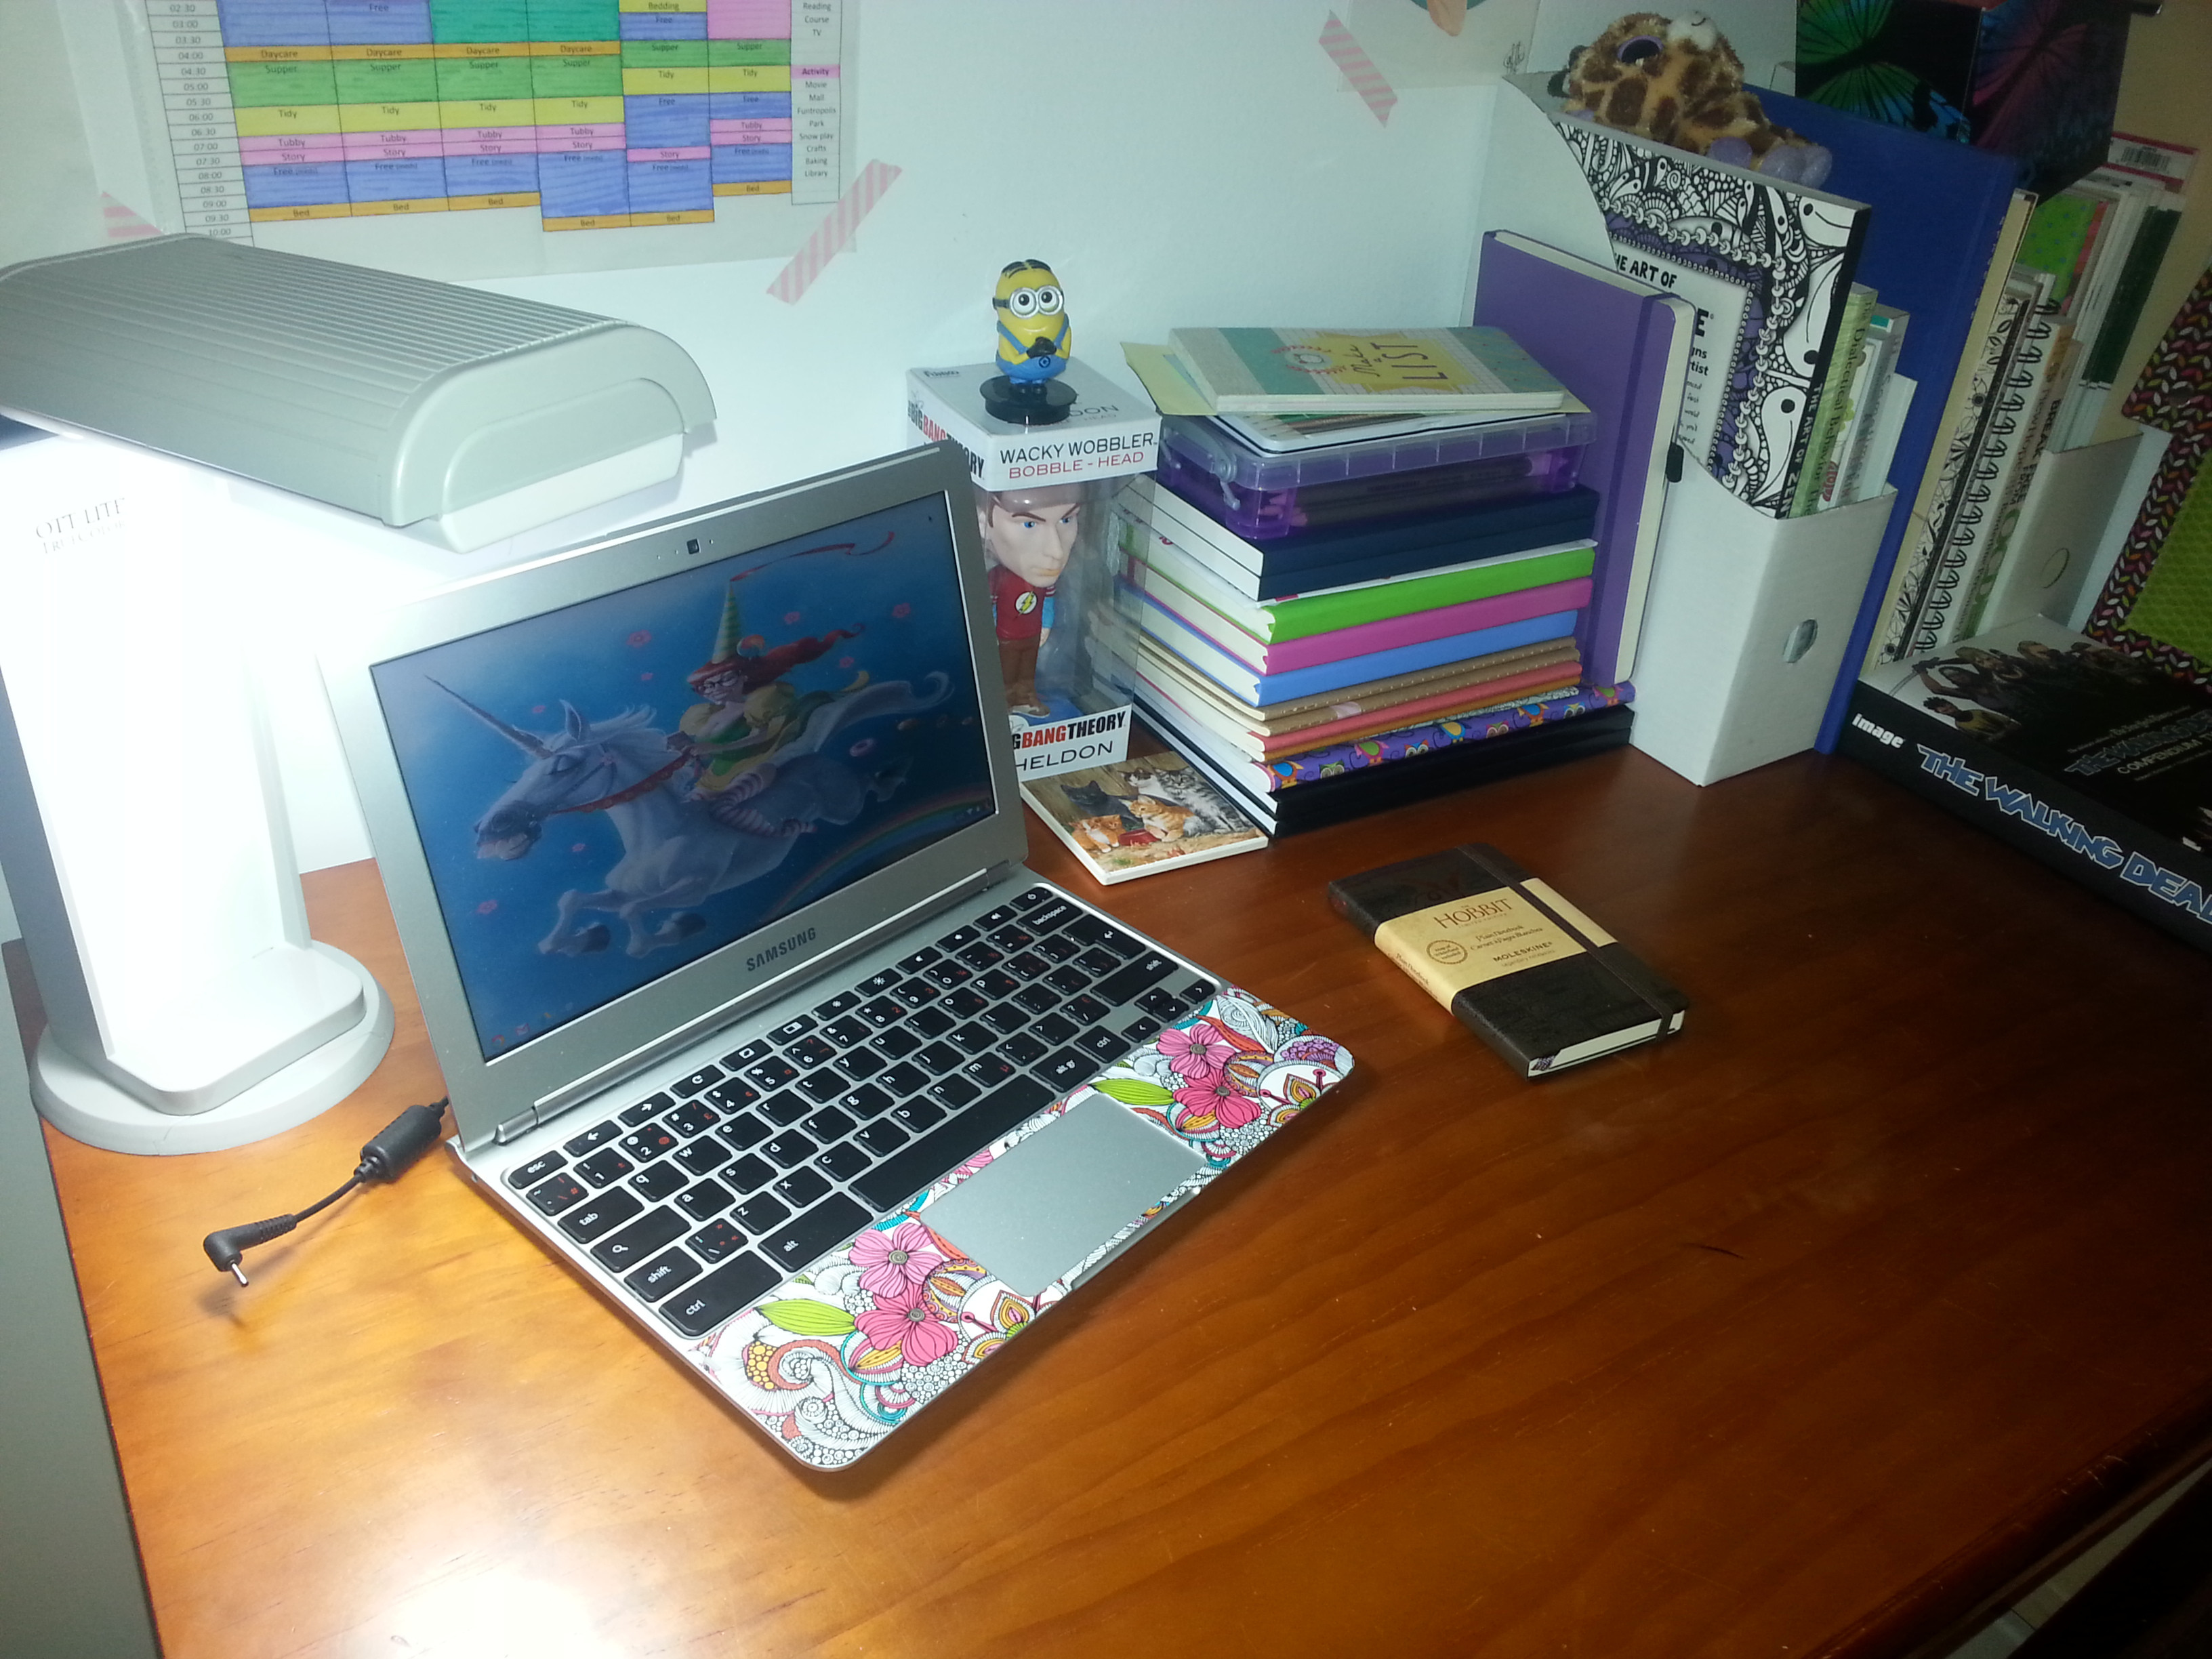 My desk, my happy place